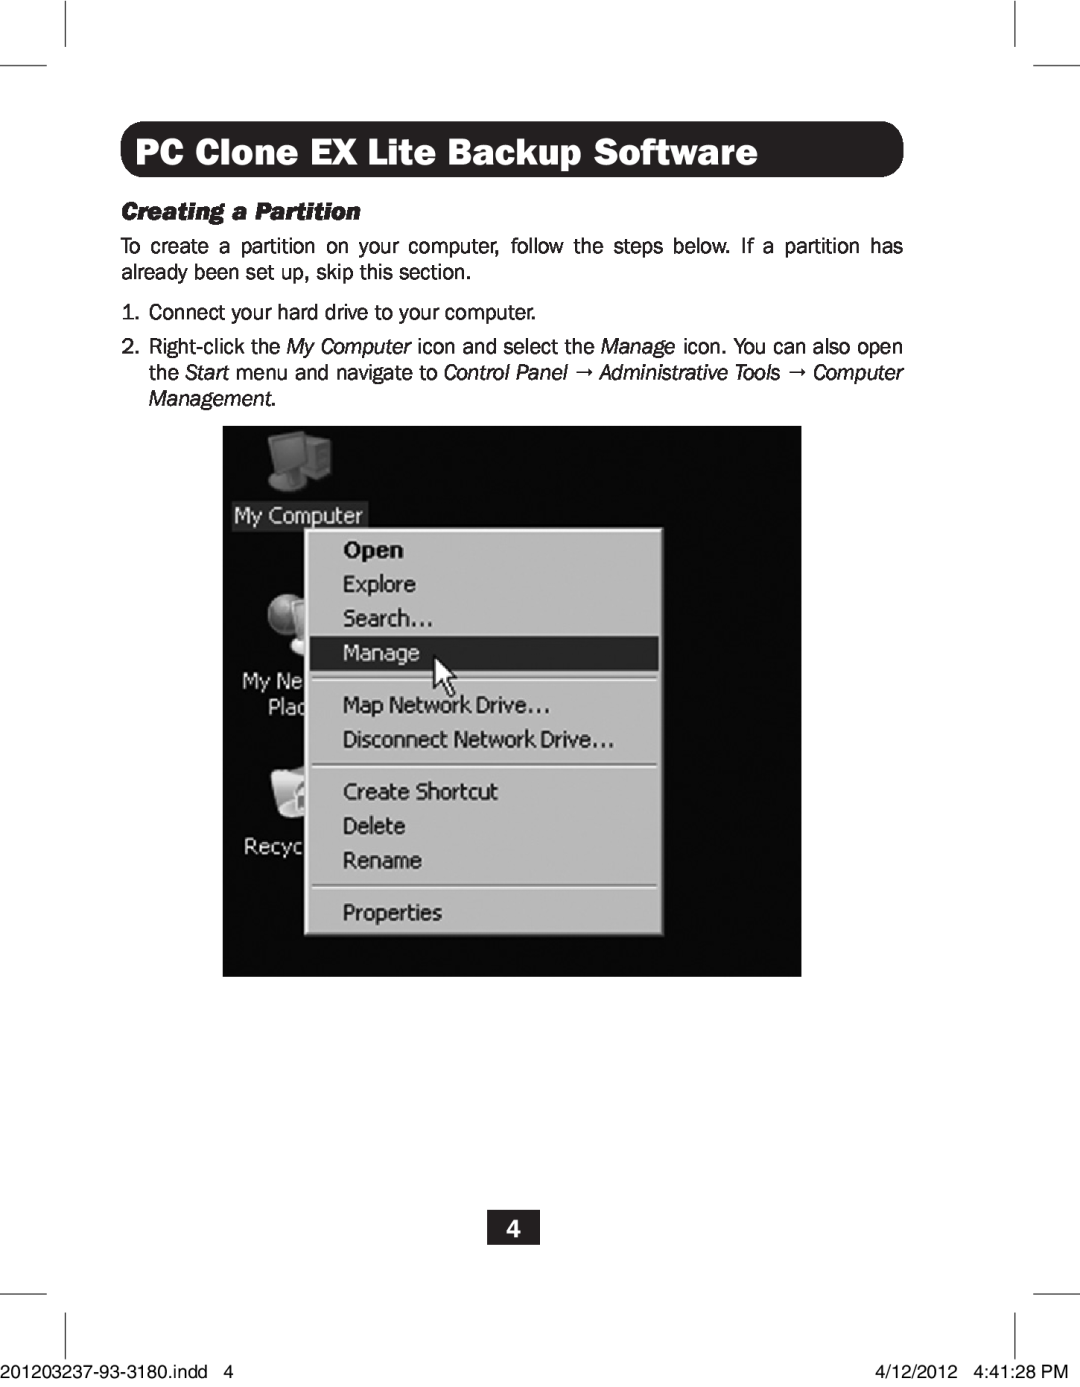 Tripp Lite U238-000-1 owner manual Creating a Partition, PC Clone EX Lite Backup Software 